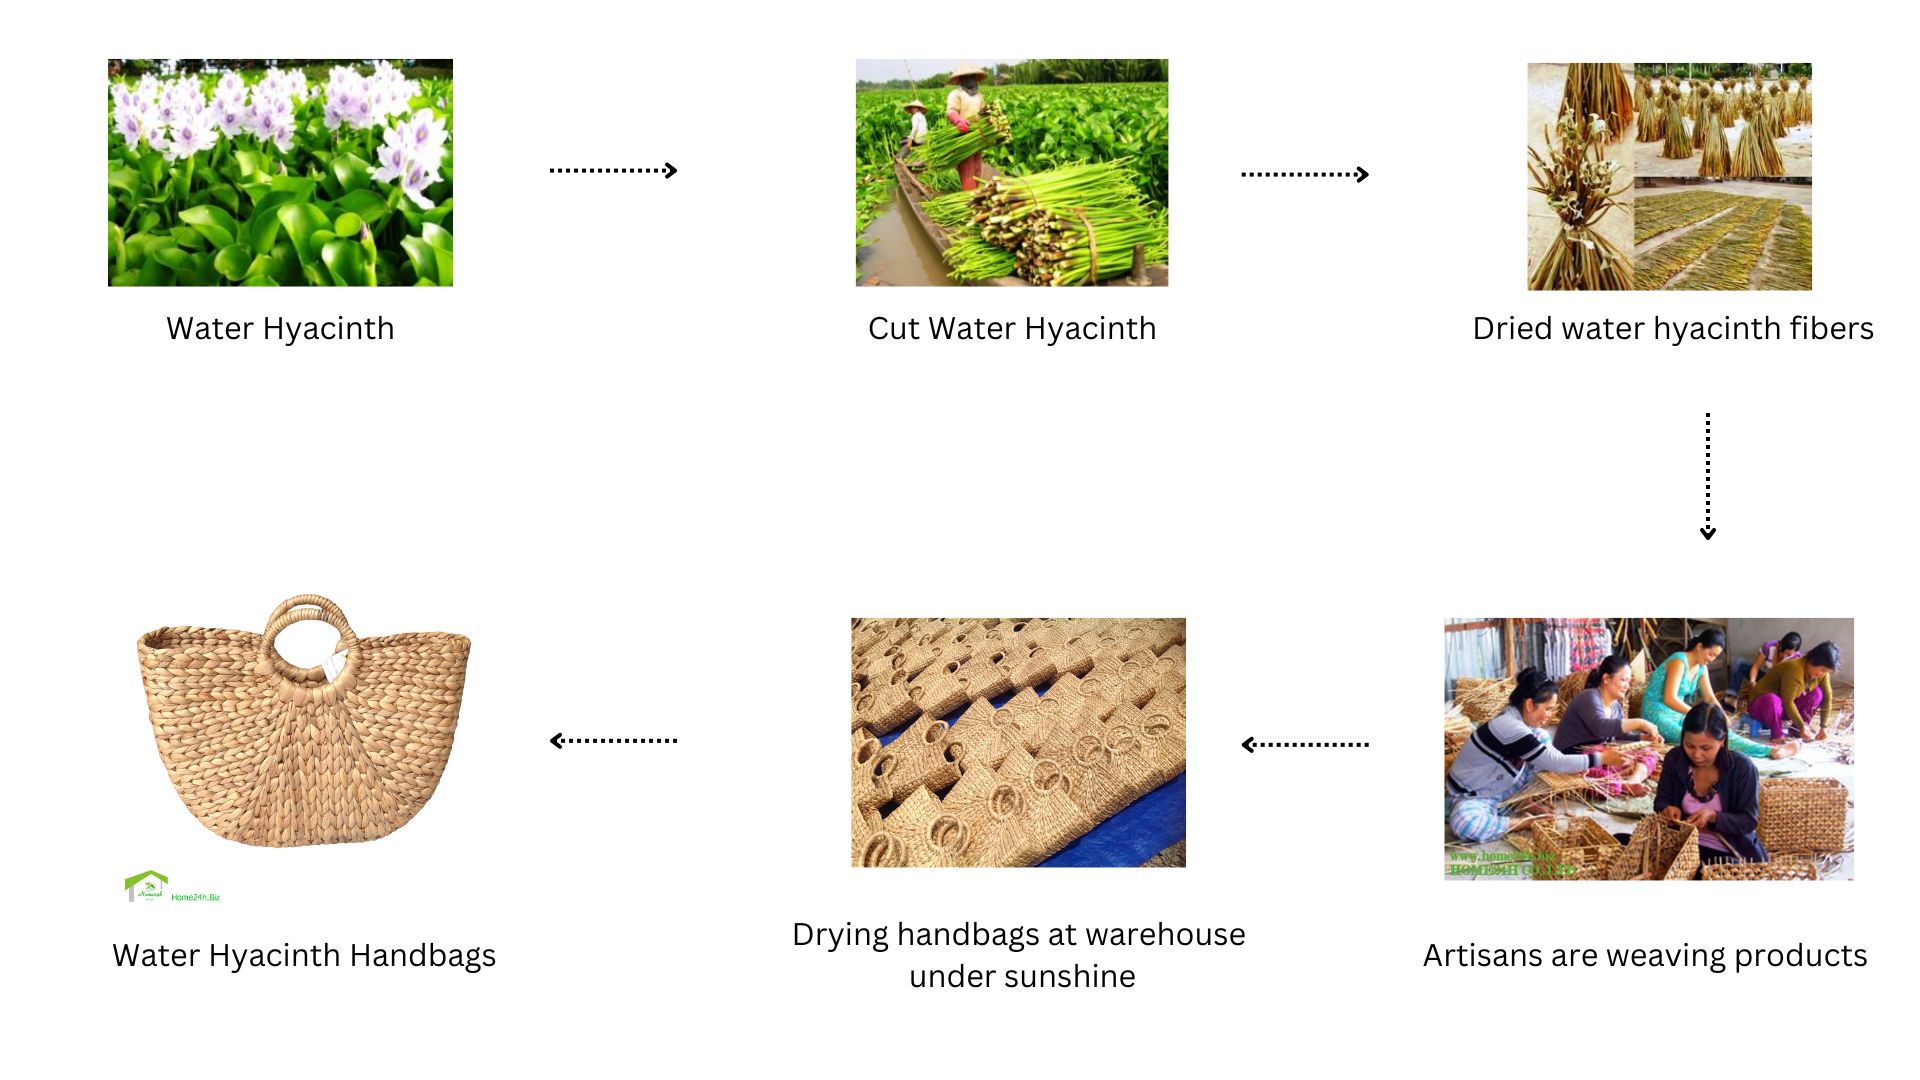 The process of crafting Water Hyacinth Handbags